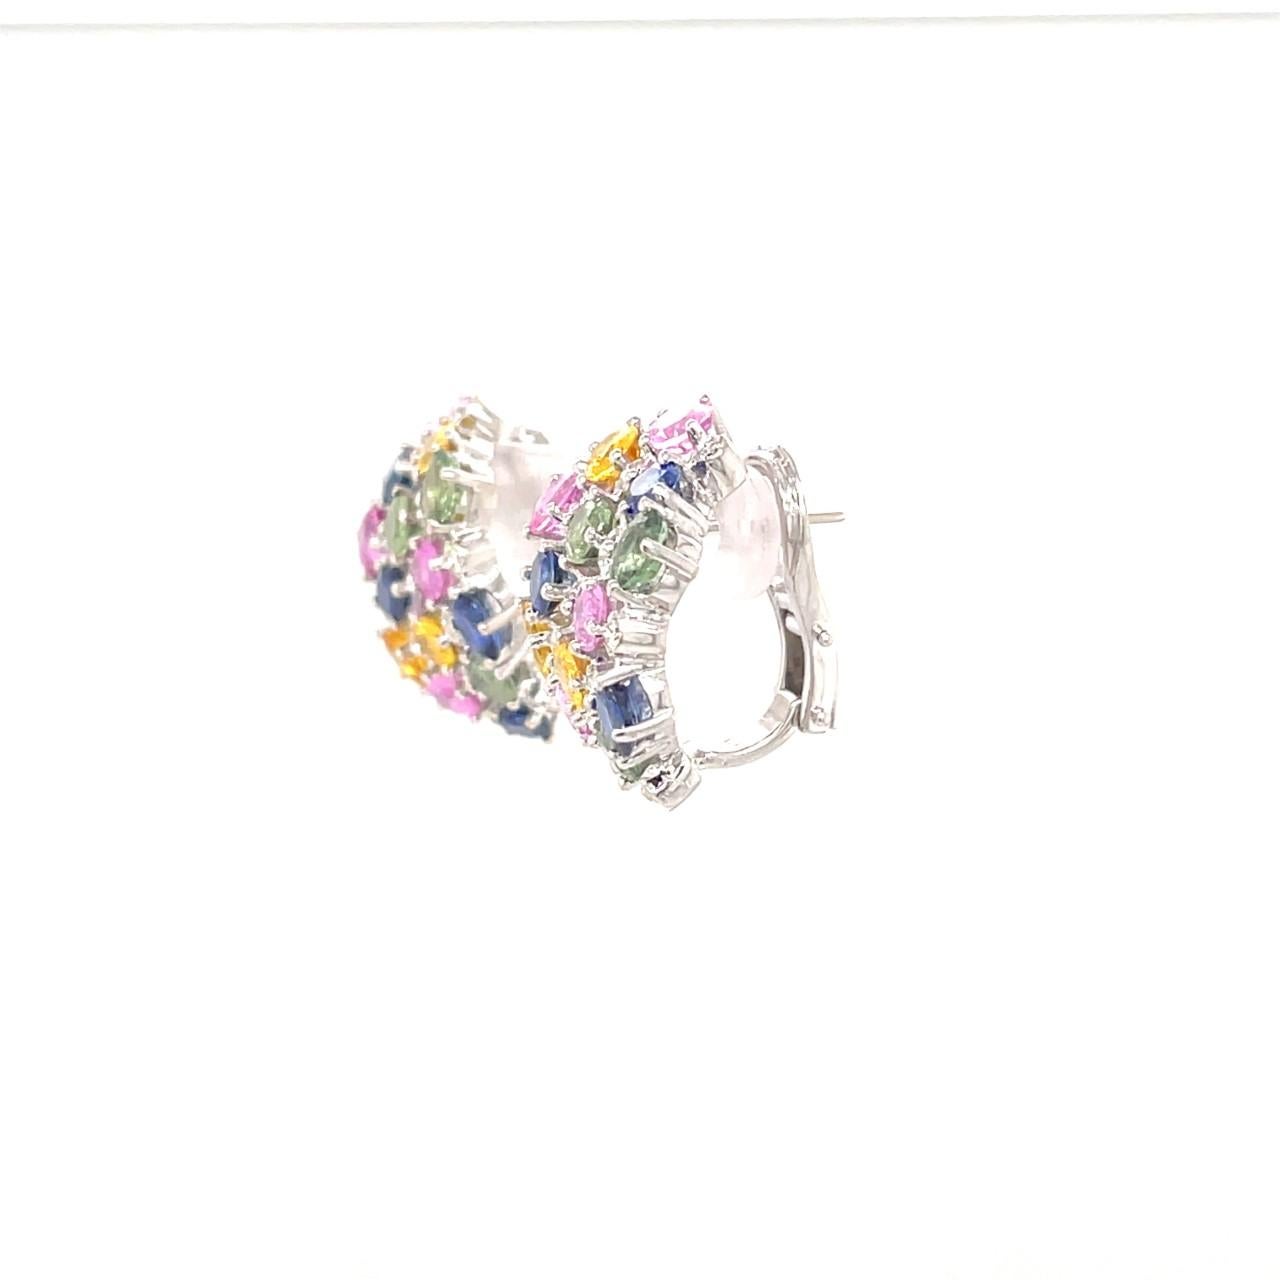 Oval Cut Multicolor Sapphire and Diamond Earrings